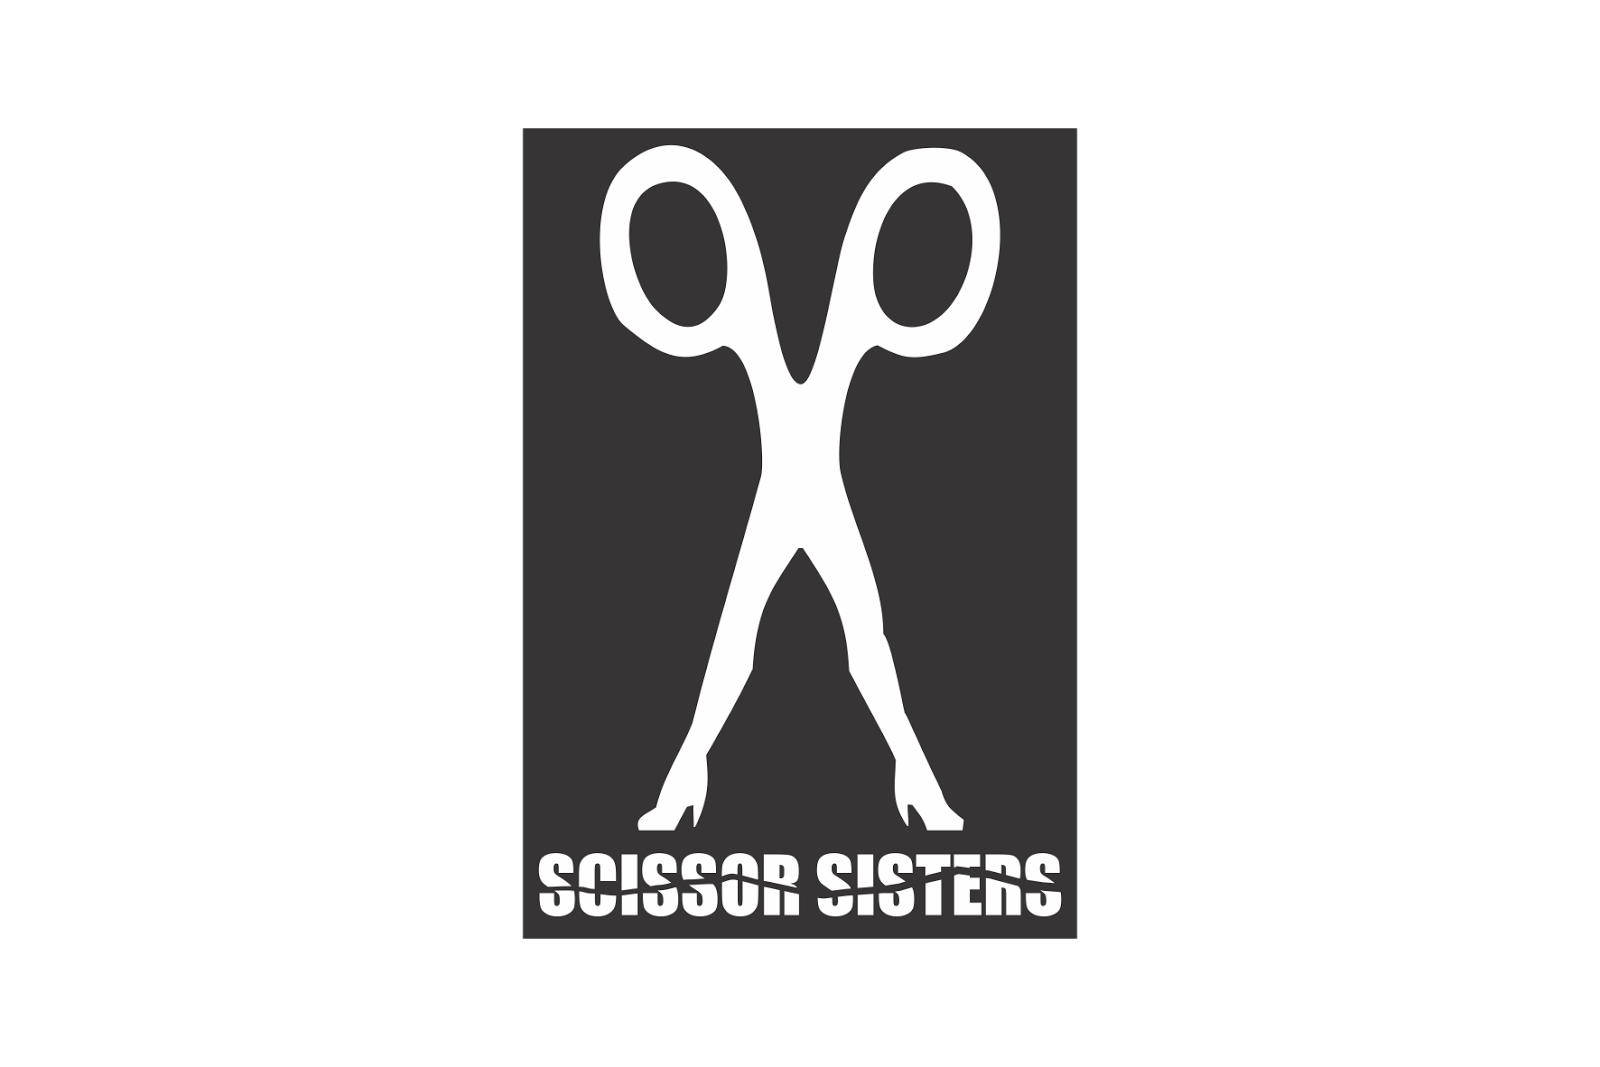 Scissor sisters i can t decide. Группа Scissor sisters. Ножницы логотип. Scissor sisters логотип. Scissor sisters ножницы.